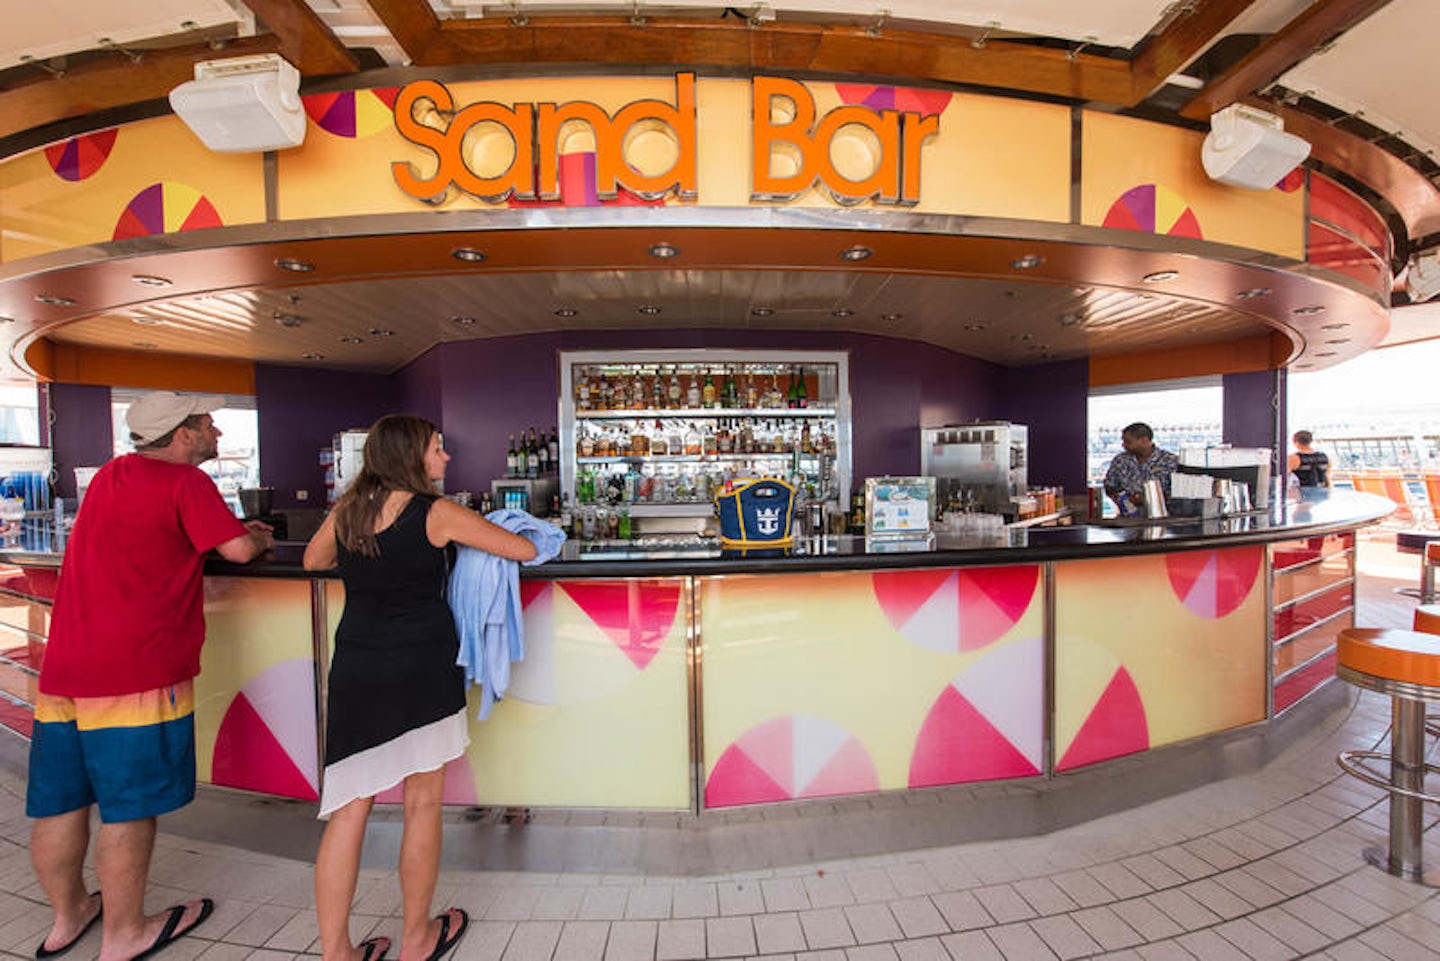 Sand Bar on Oasis of the Seas